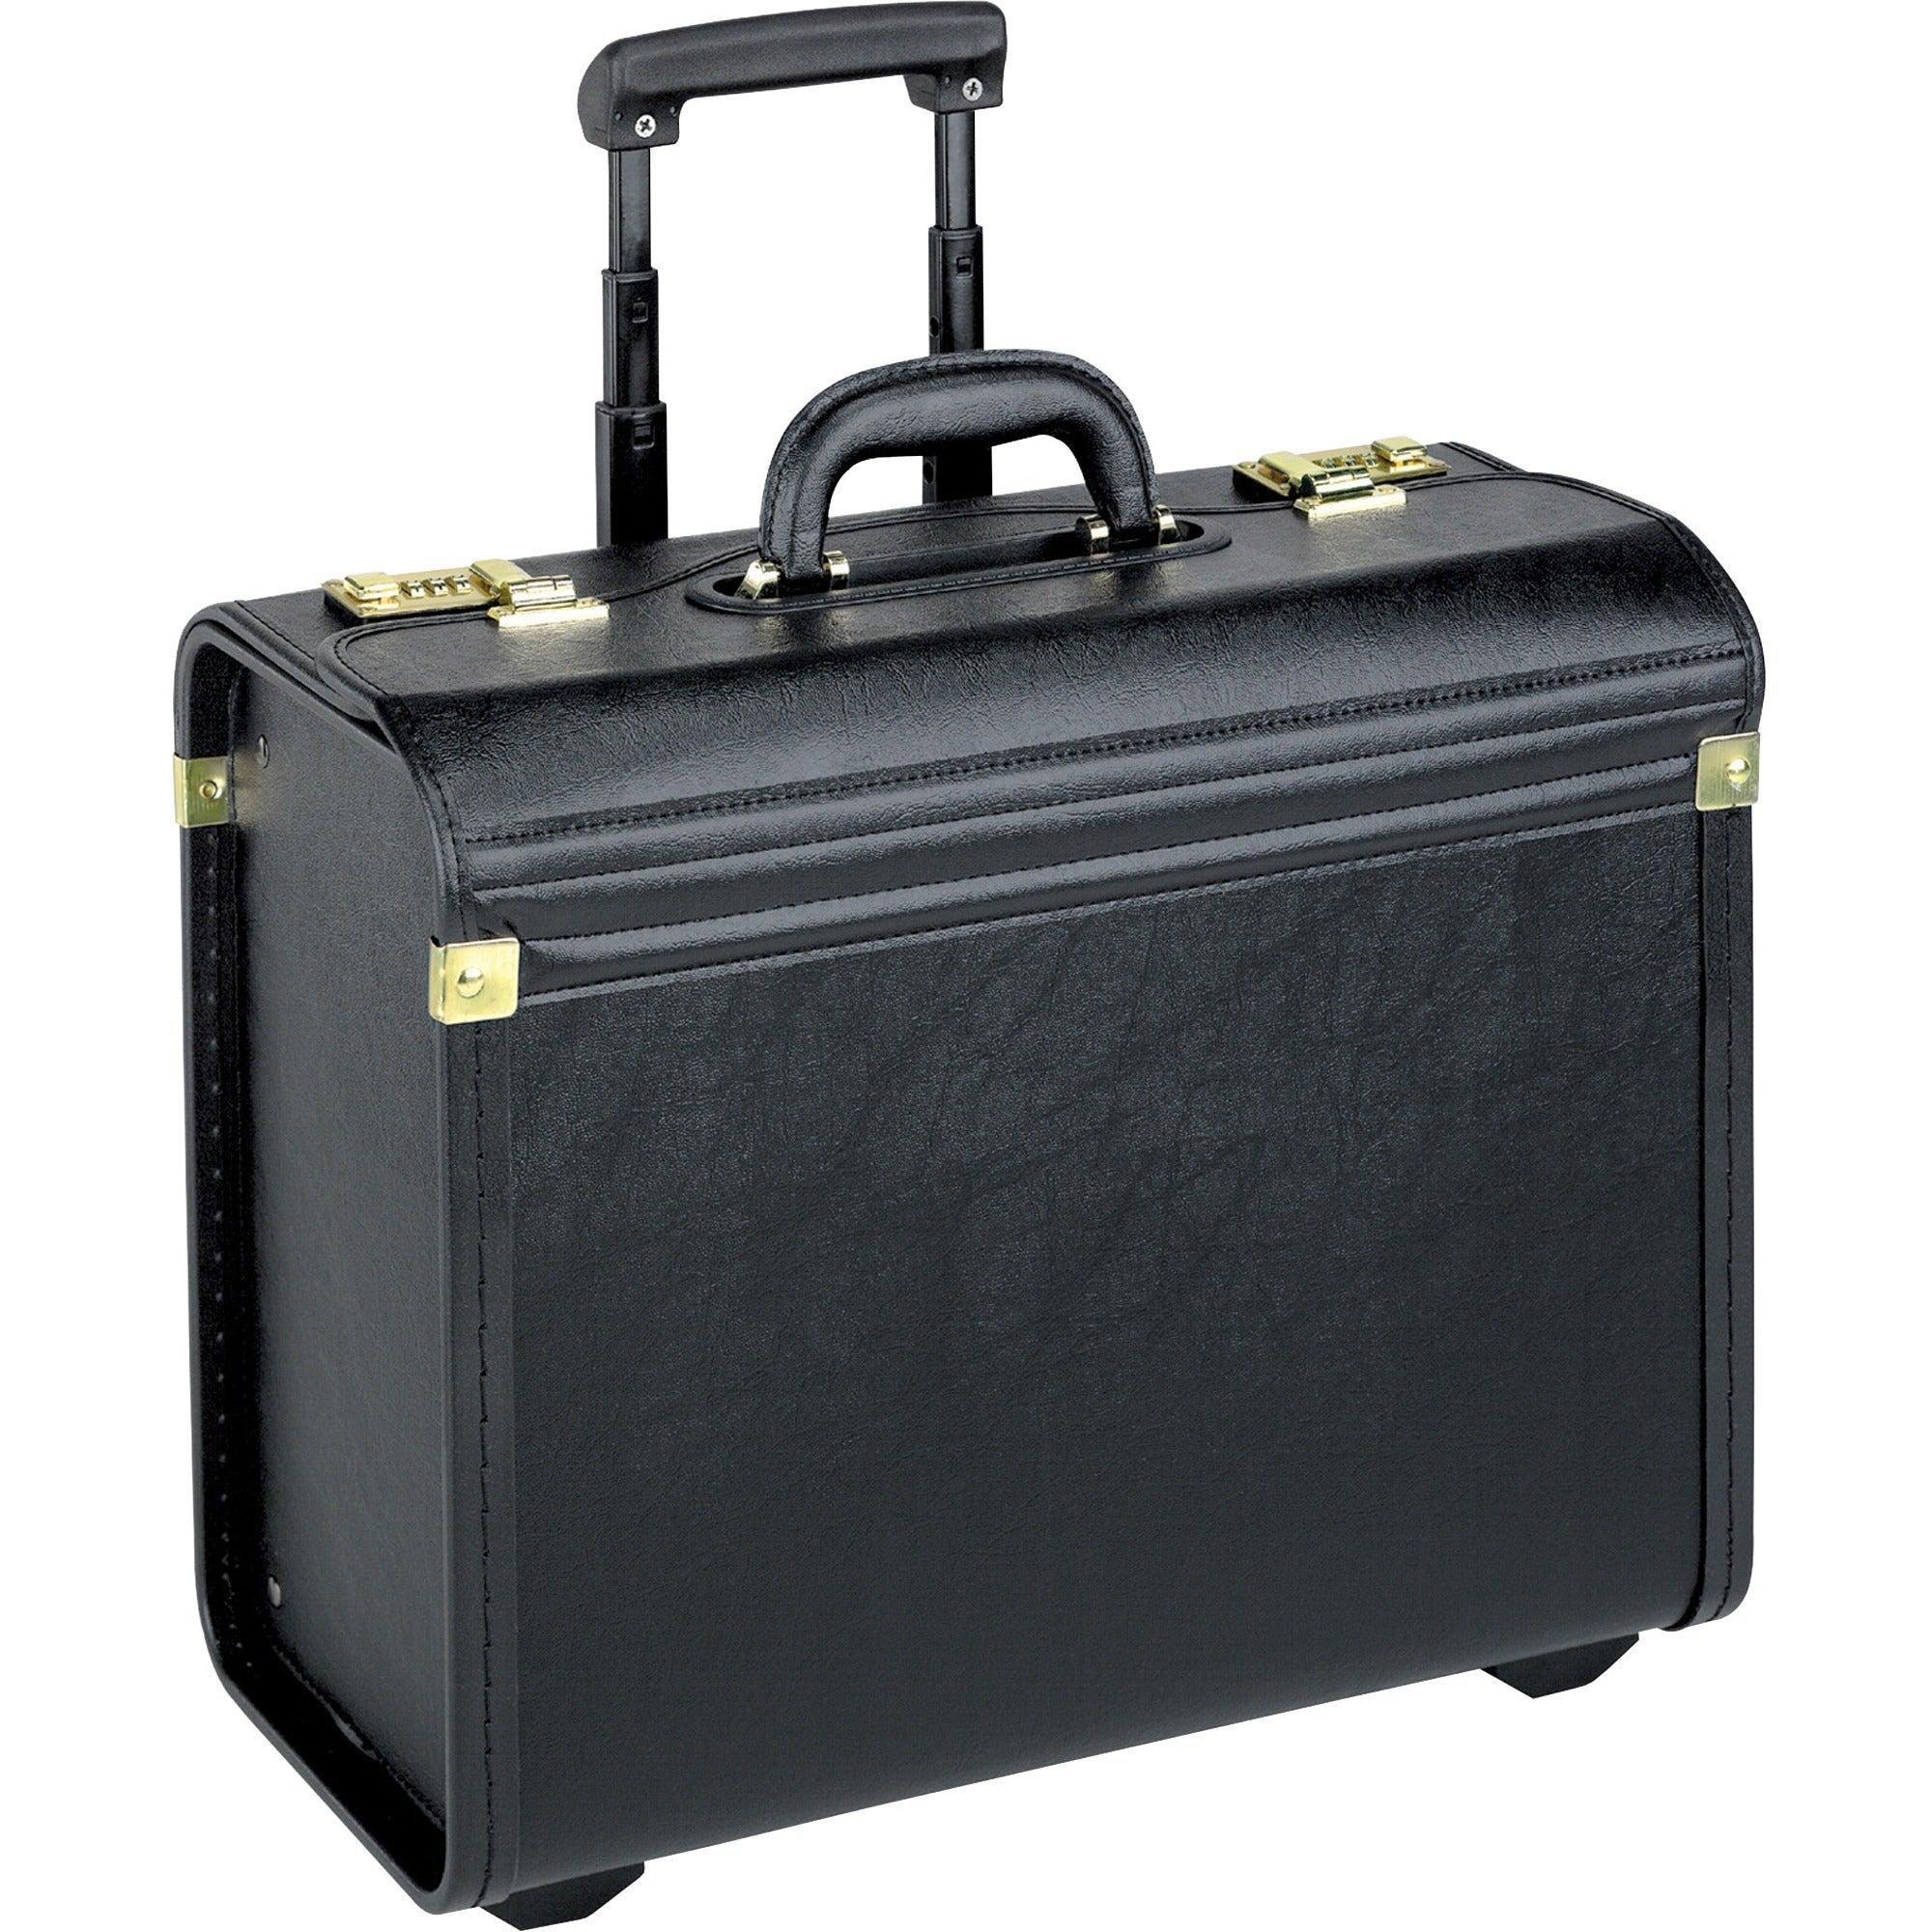 Lorell Travel/Luggage Case (Roller) Travel Essential, Book, File Folder - Black - Vinyl Body - Handle - 14" Height x 22" Width x 8" Depth - 1 Each - 